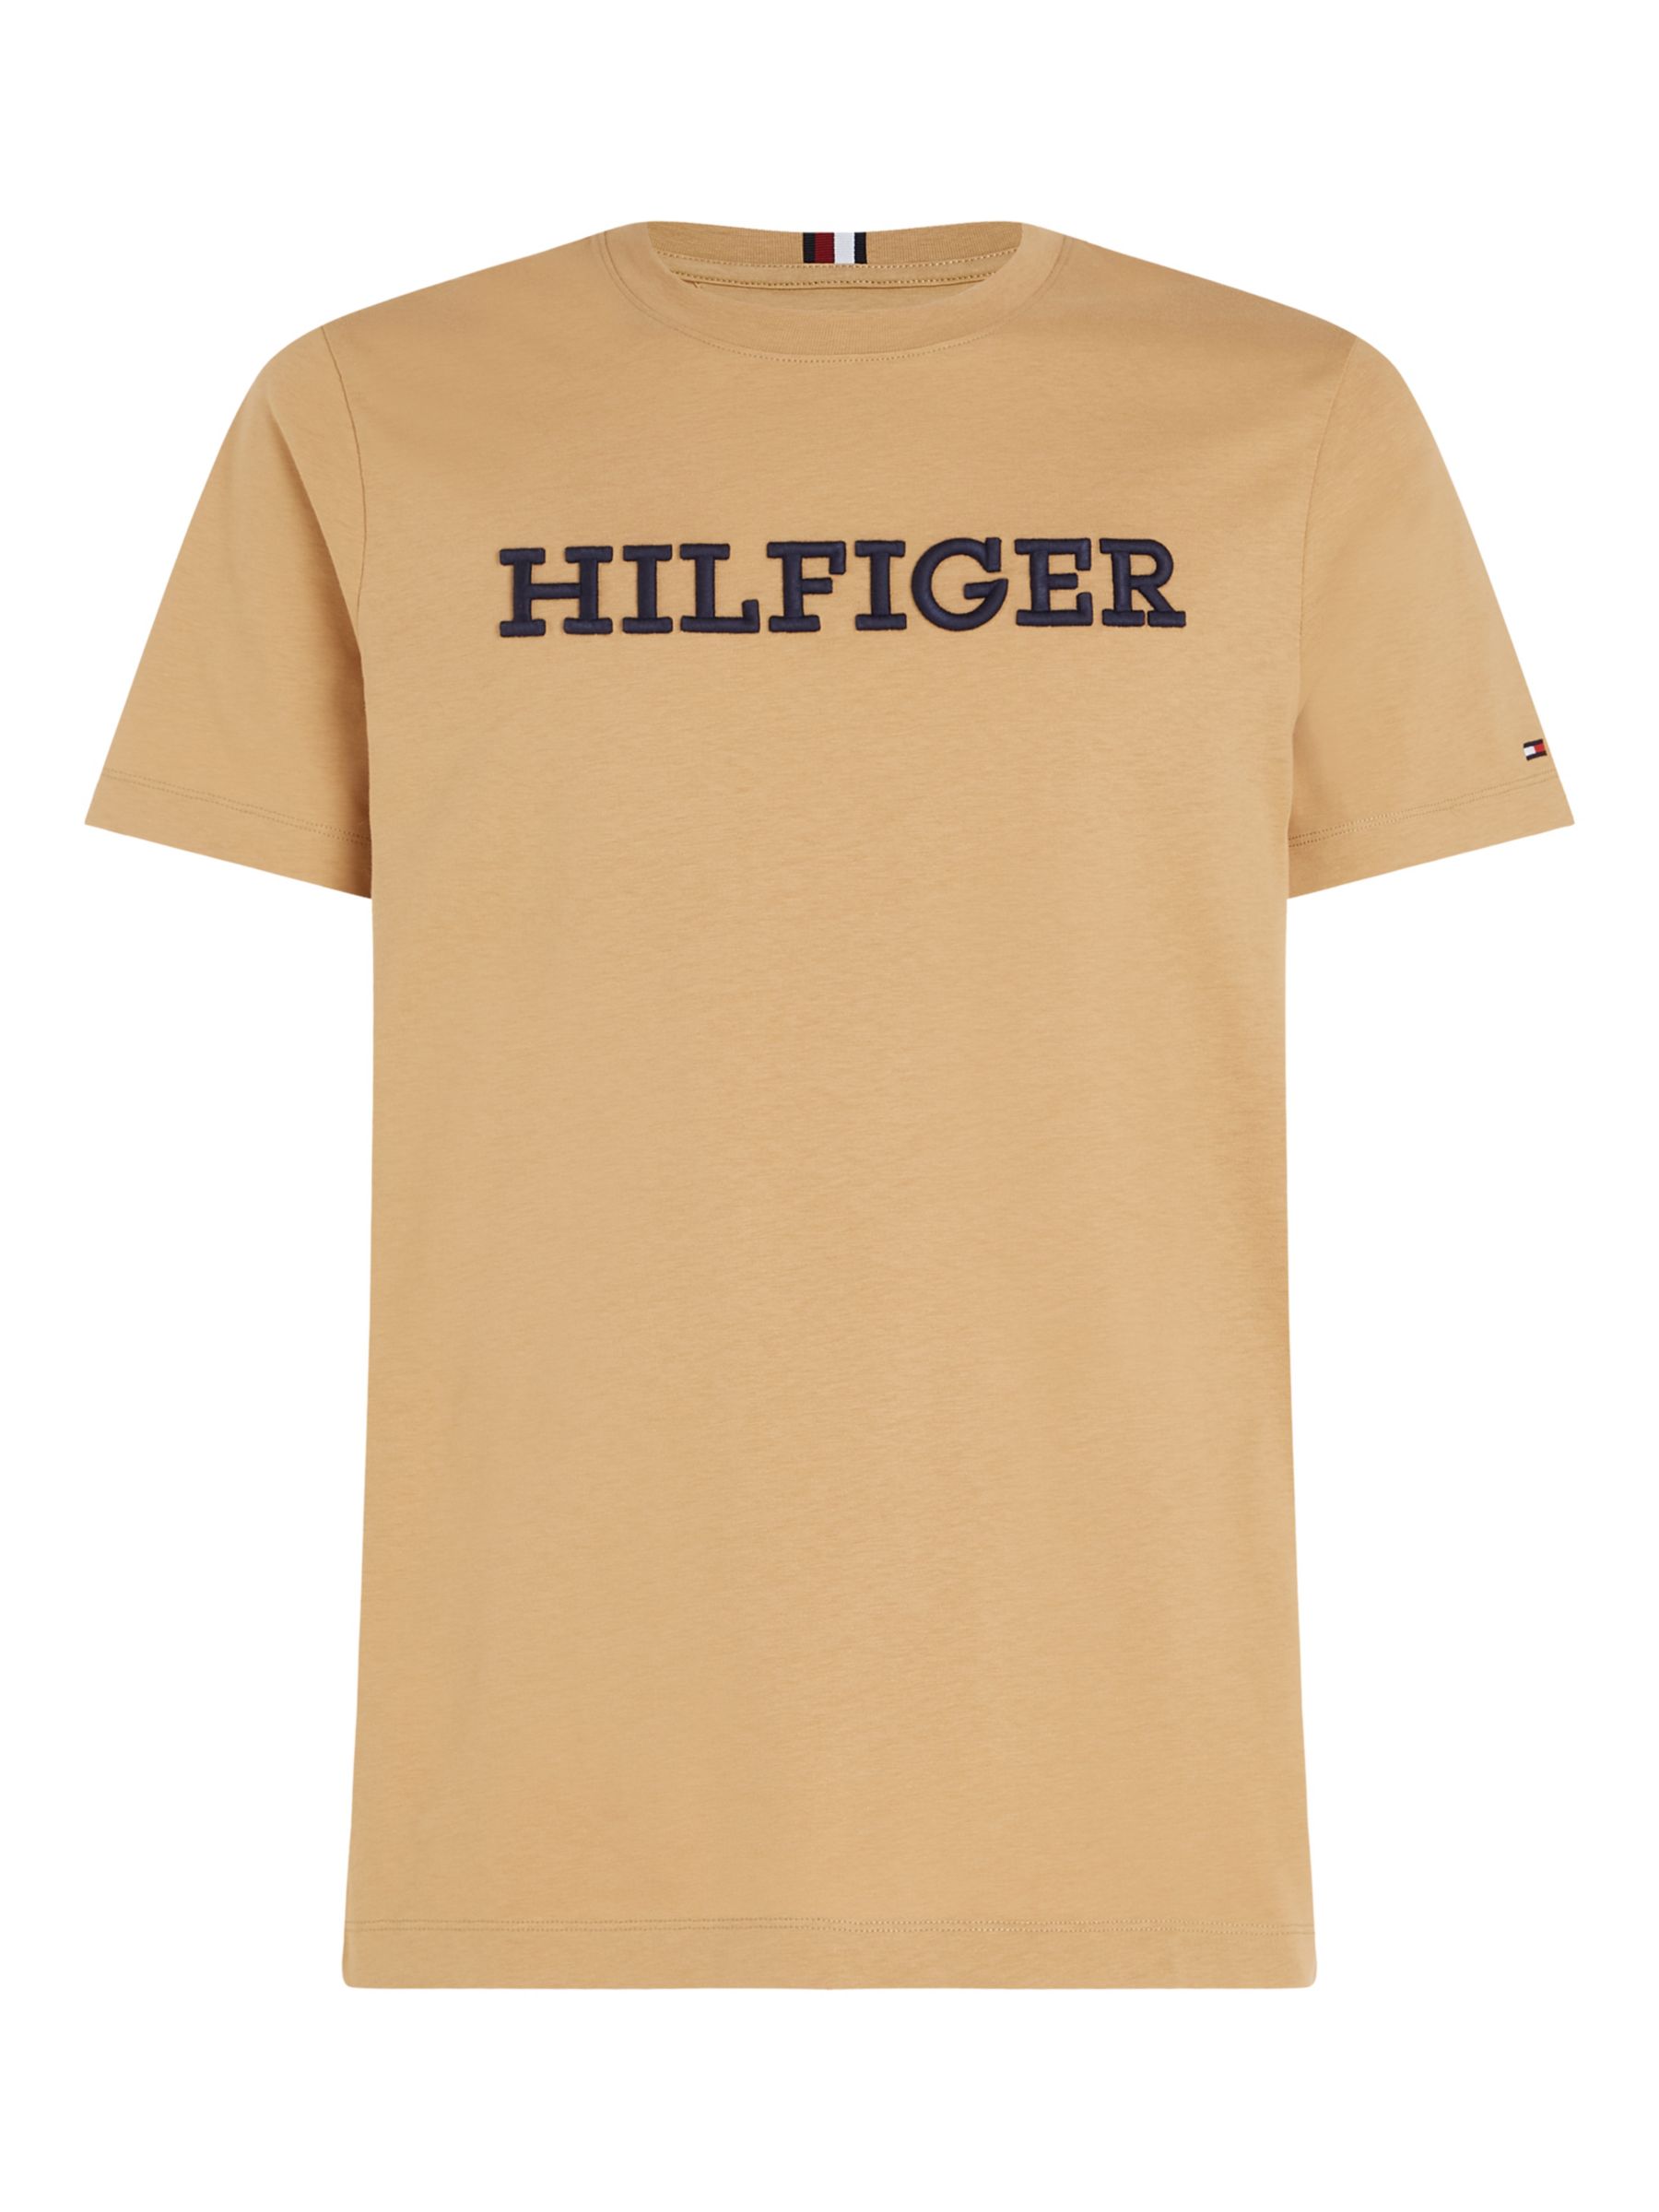 Tommy Hilfiger Monotype Graphic T-Shirt, Classic Khaki, S